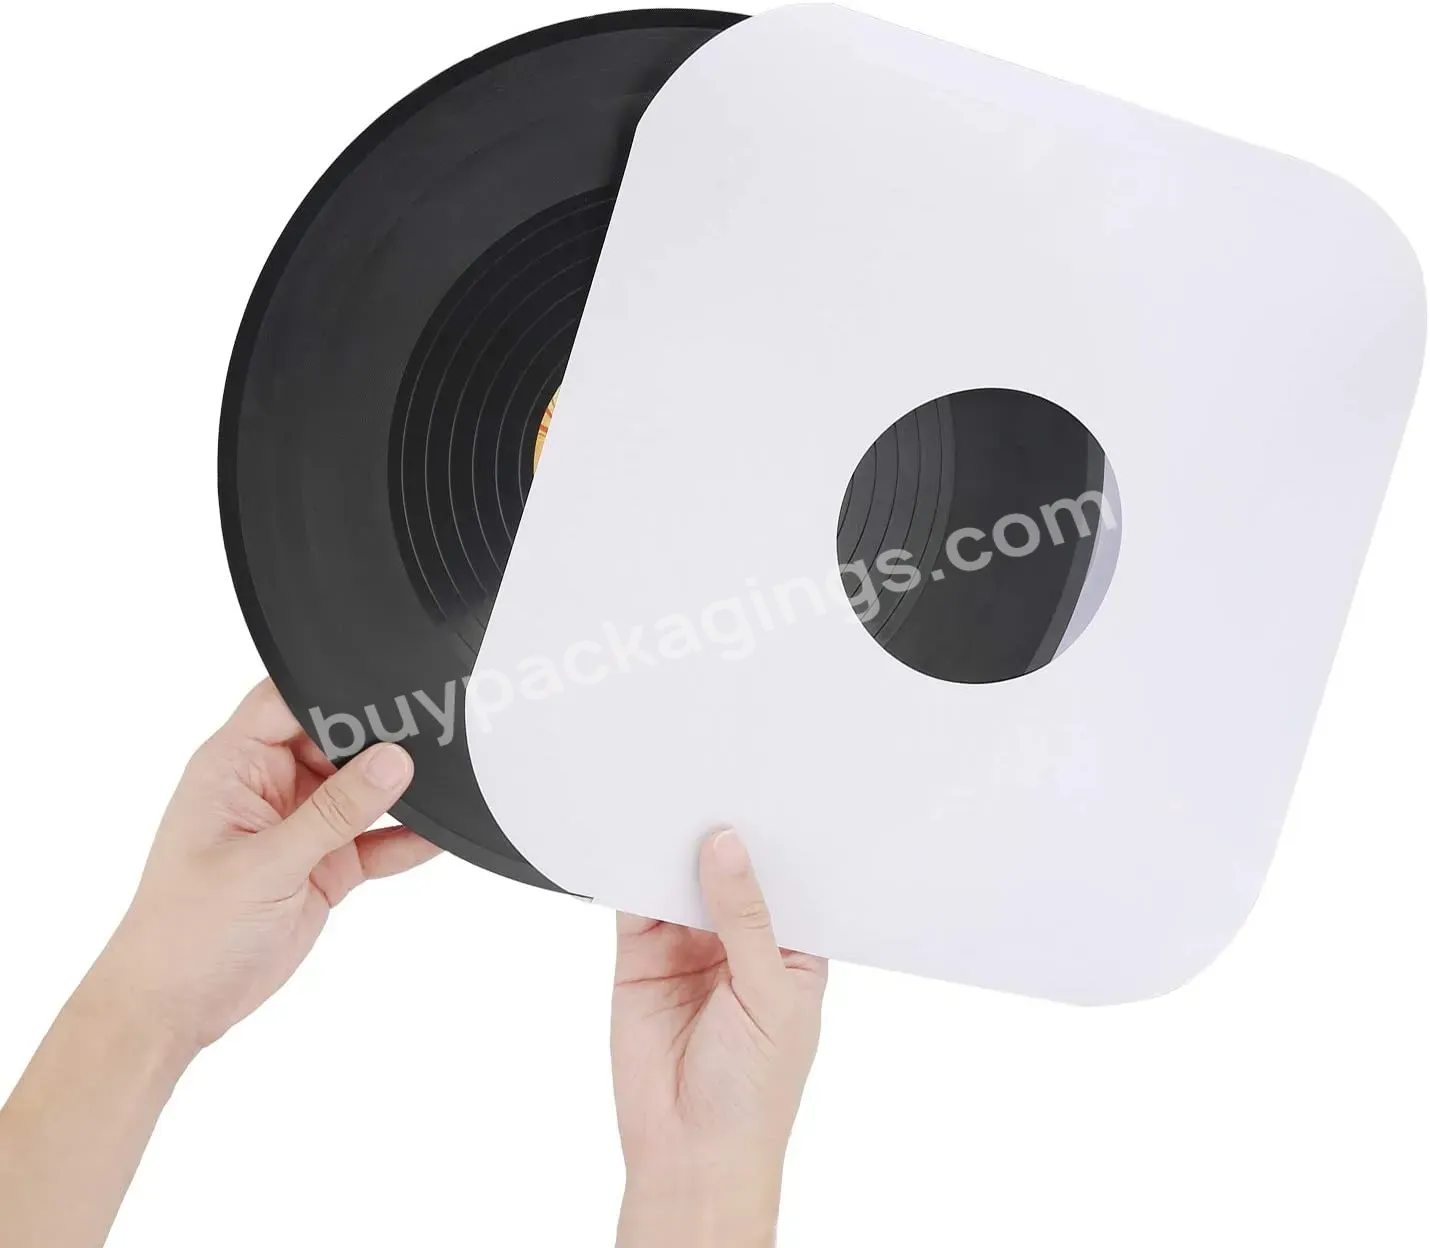 50 Packs Rounded White Album Sleeves Acid Free Paper Lp Sleeves For 7" Records - Buy Rounded White Album Sleeves,Acid Free Paper Lp Sleeves For 7" Records,50 Packs Paper Record Sleeves.